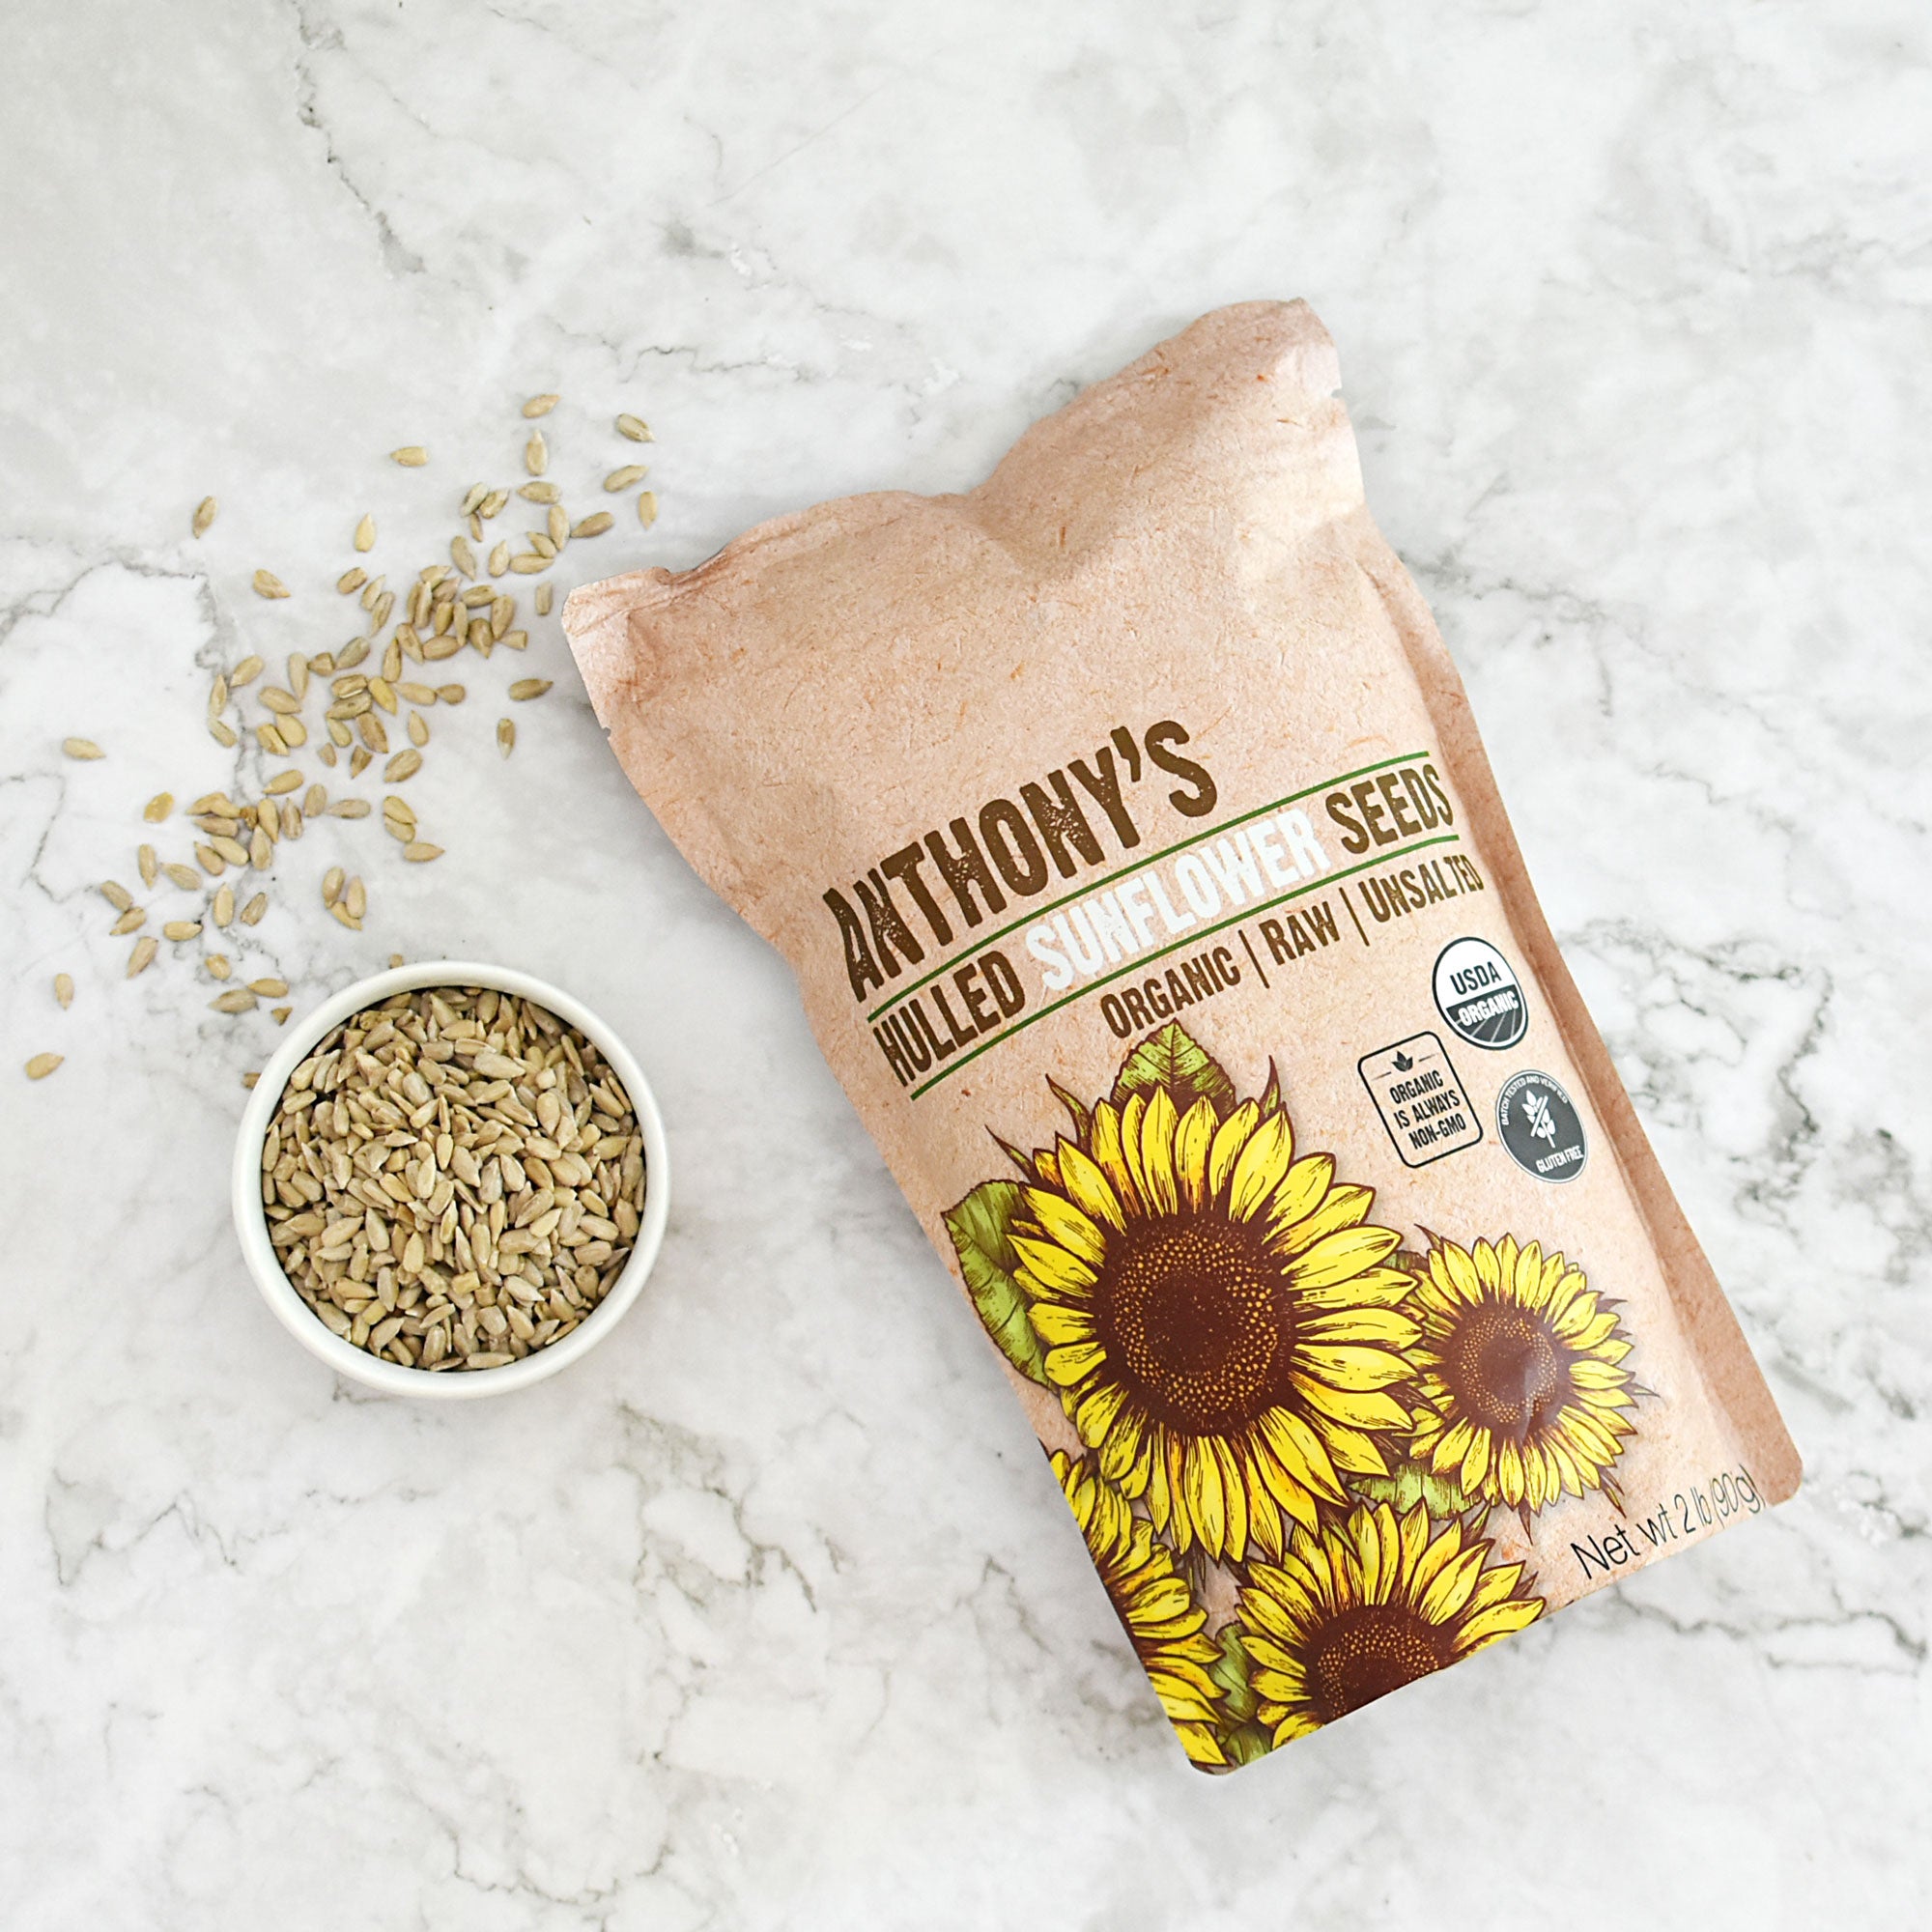 Hulled Sunflower Seeds: USDA Organic & Batch Tested Gluten Free